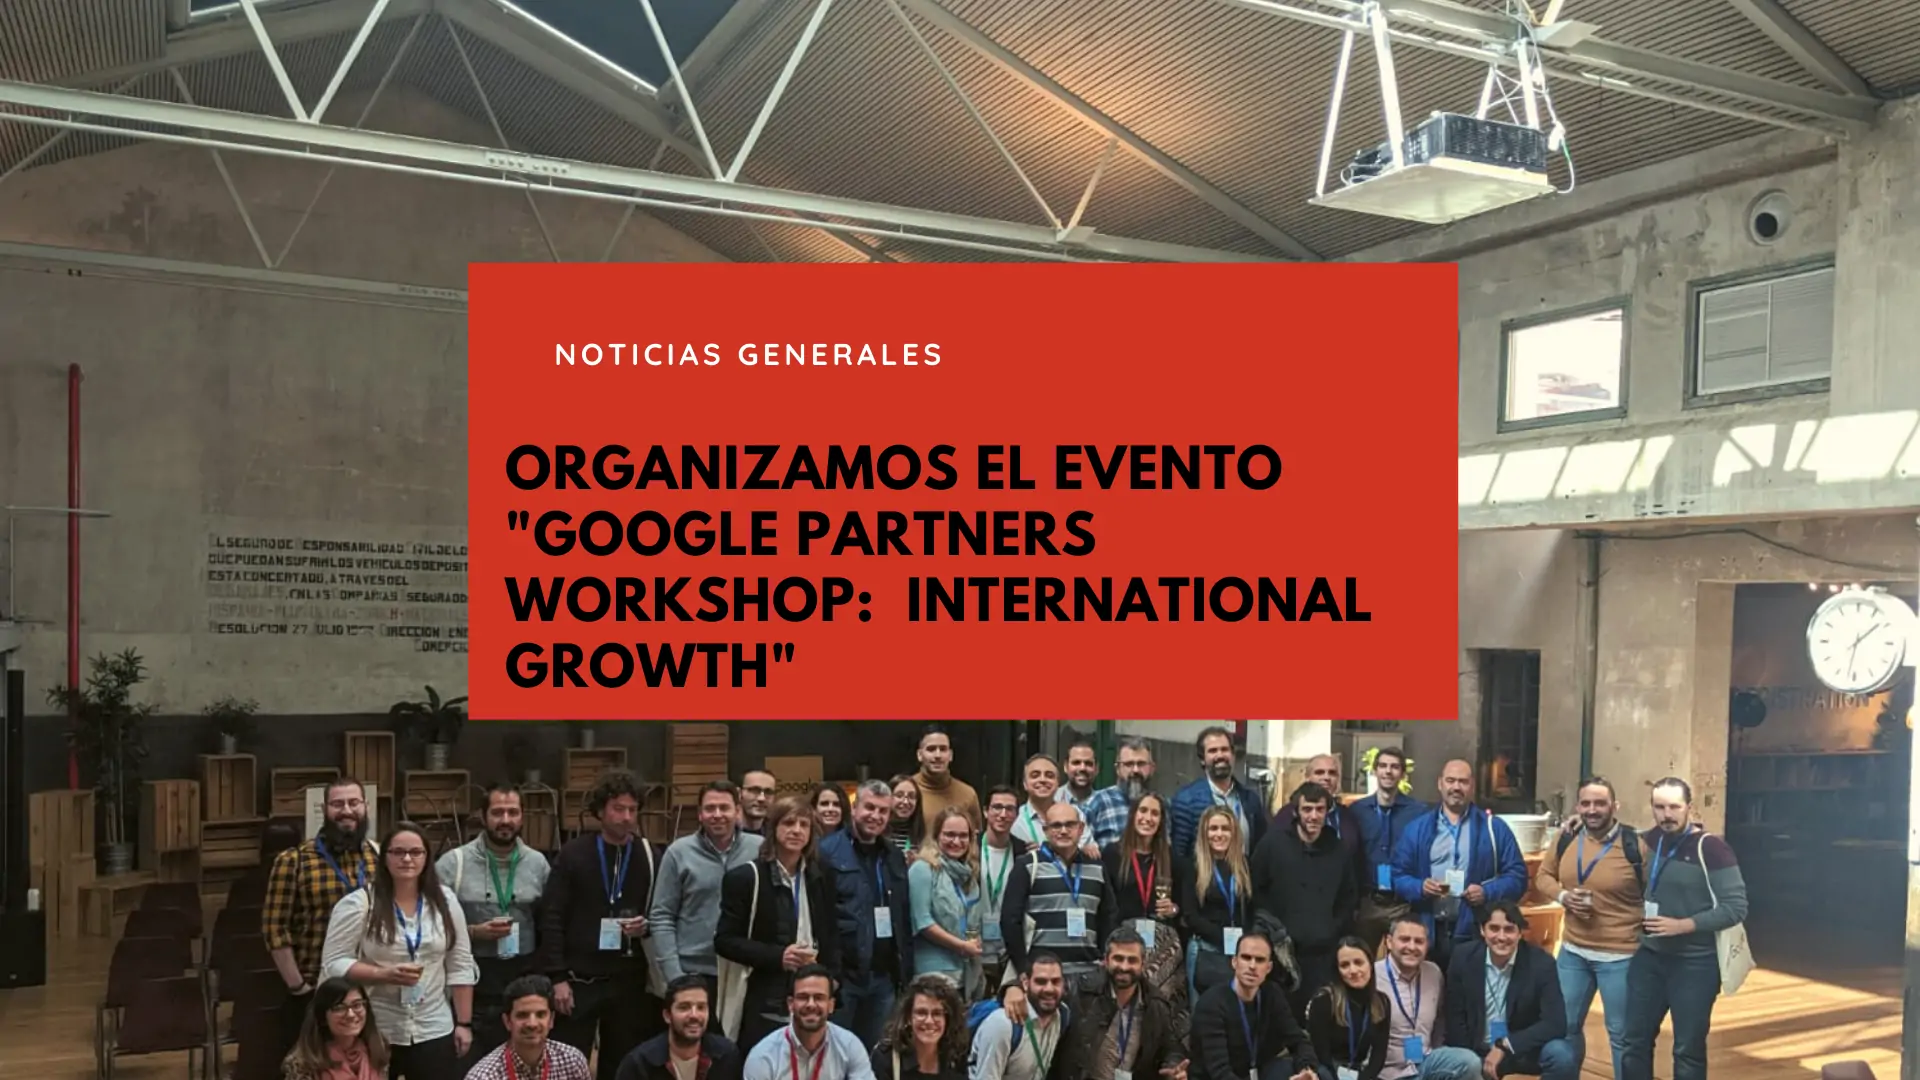 We organized the event Google Partners Workshop: International Growth